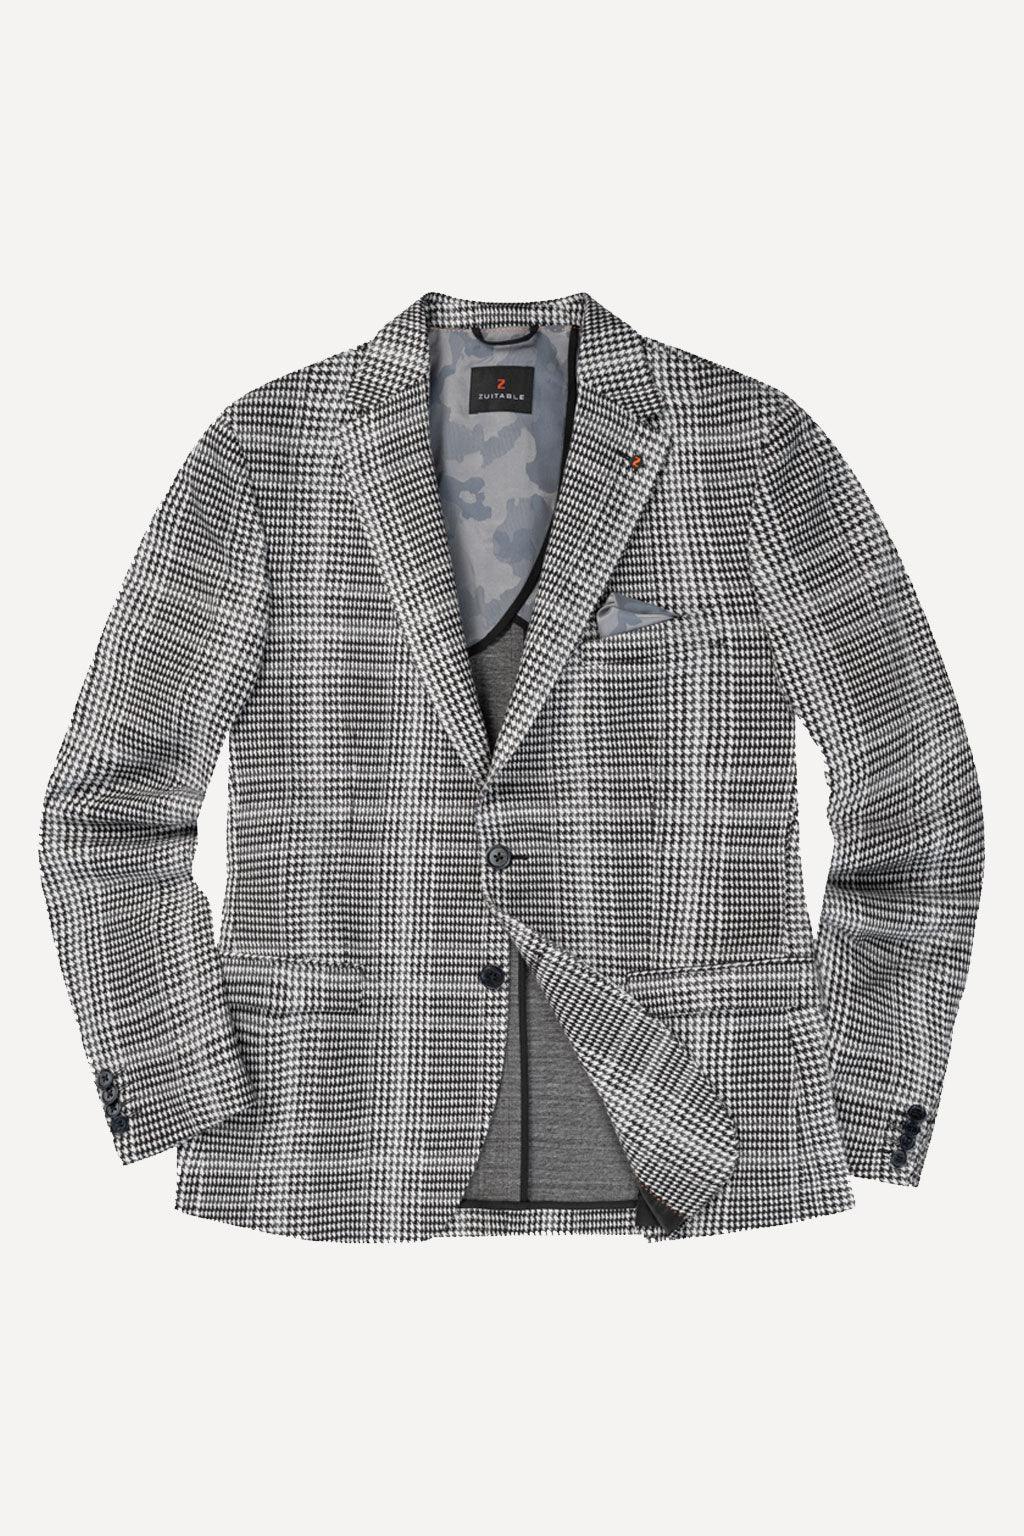 Zuitable blazer | Big Boss | the menswear concept